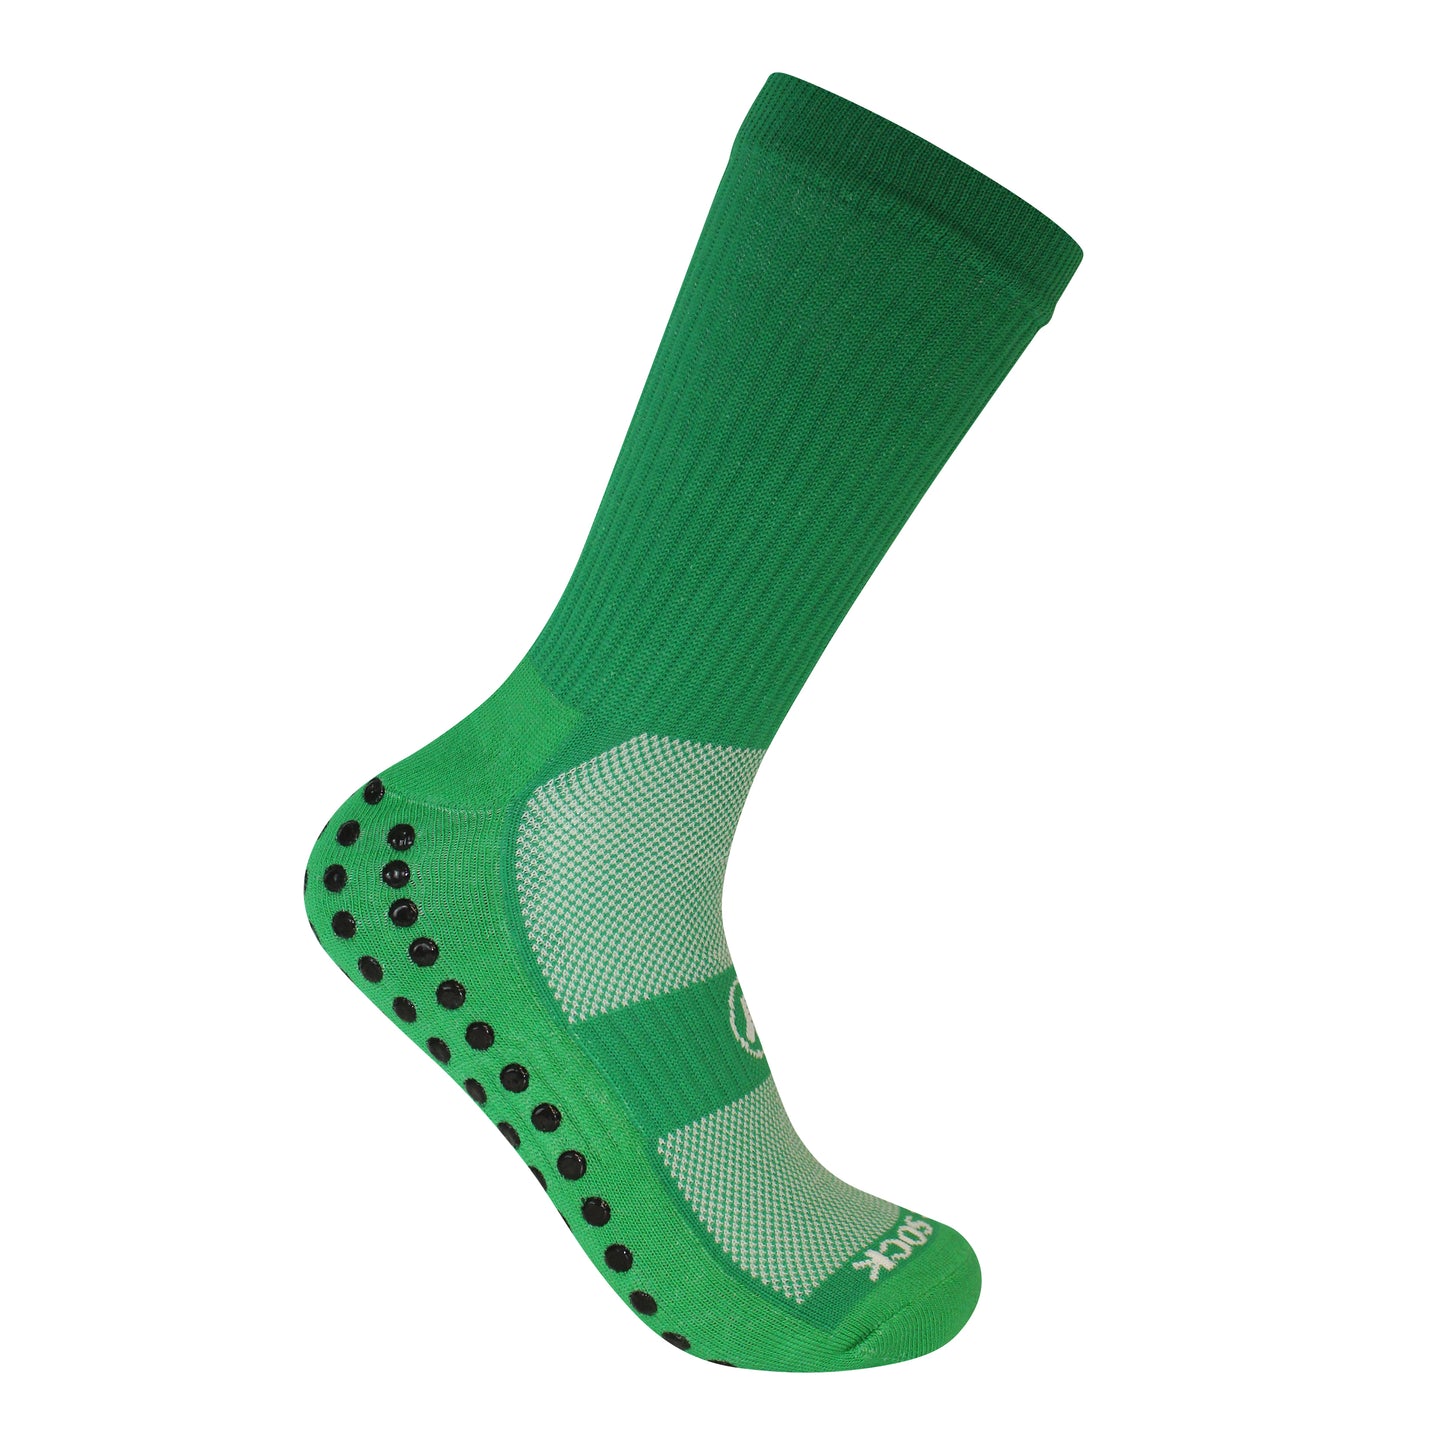 FootGripz Mid Grip Socks | Green